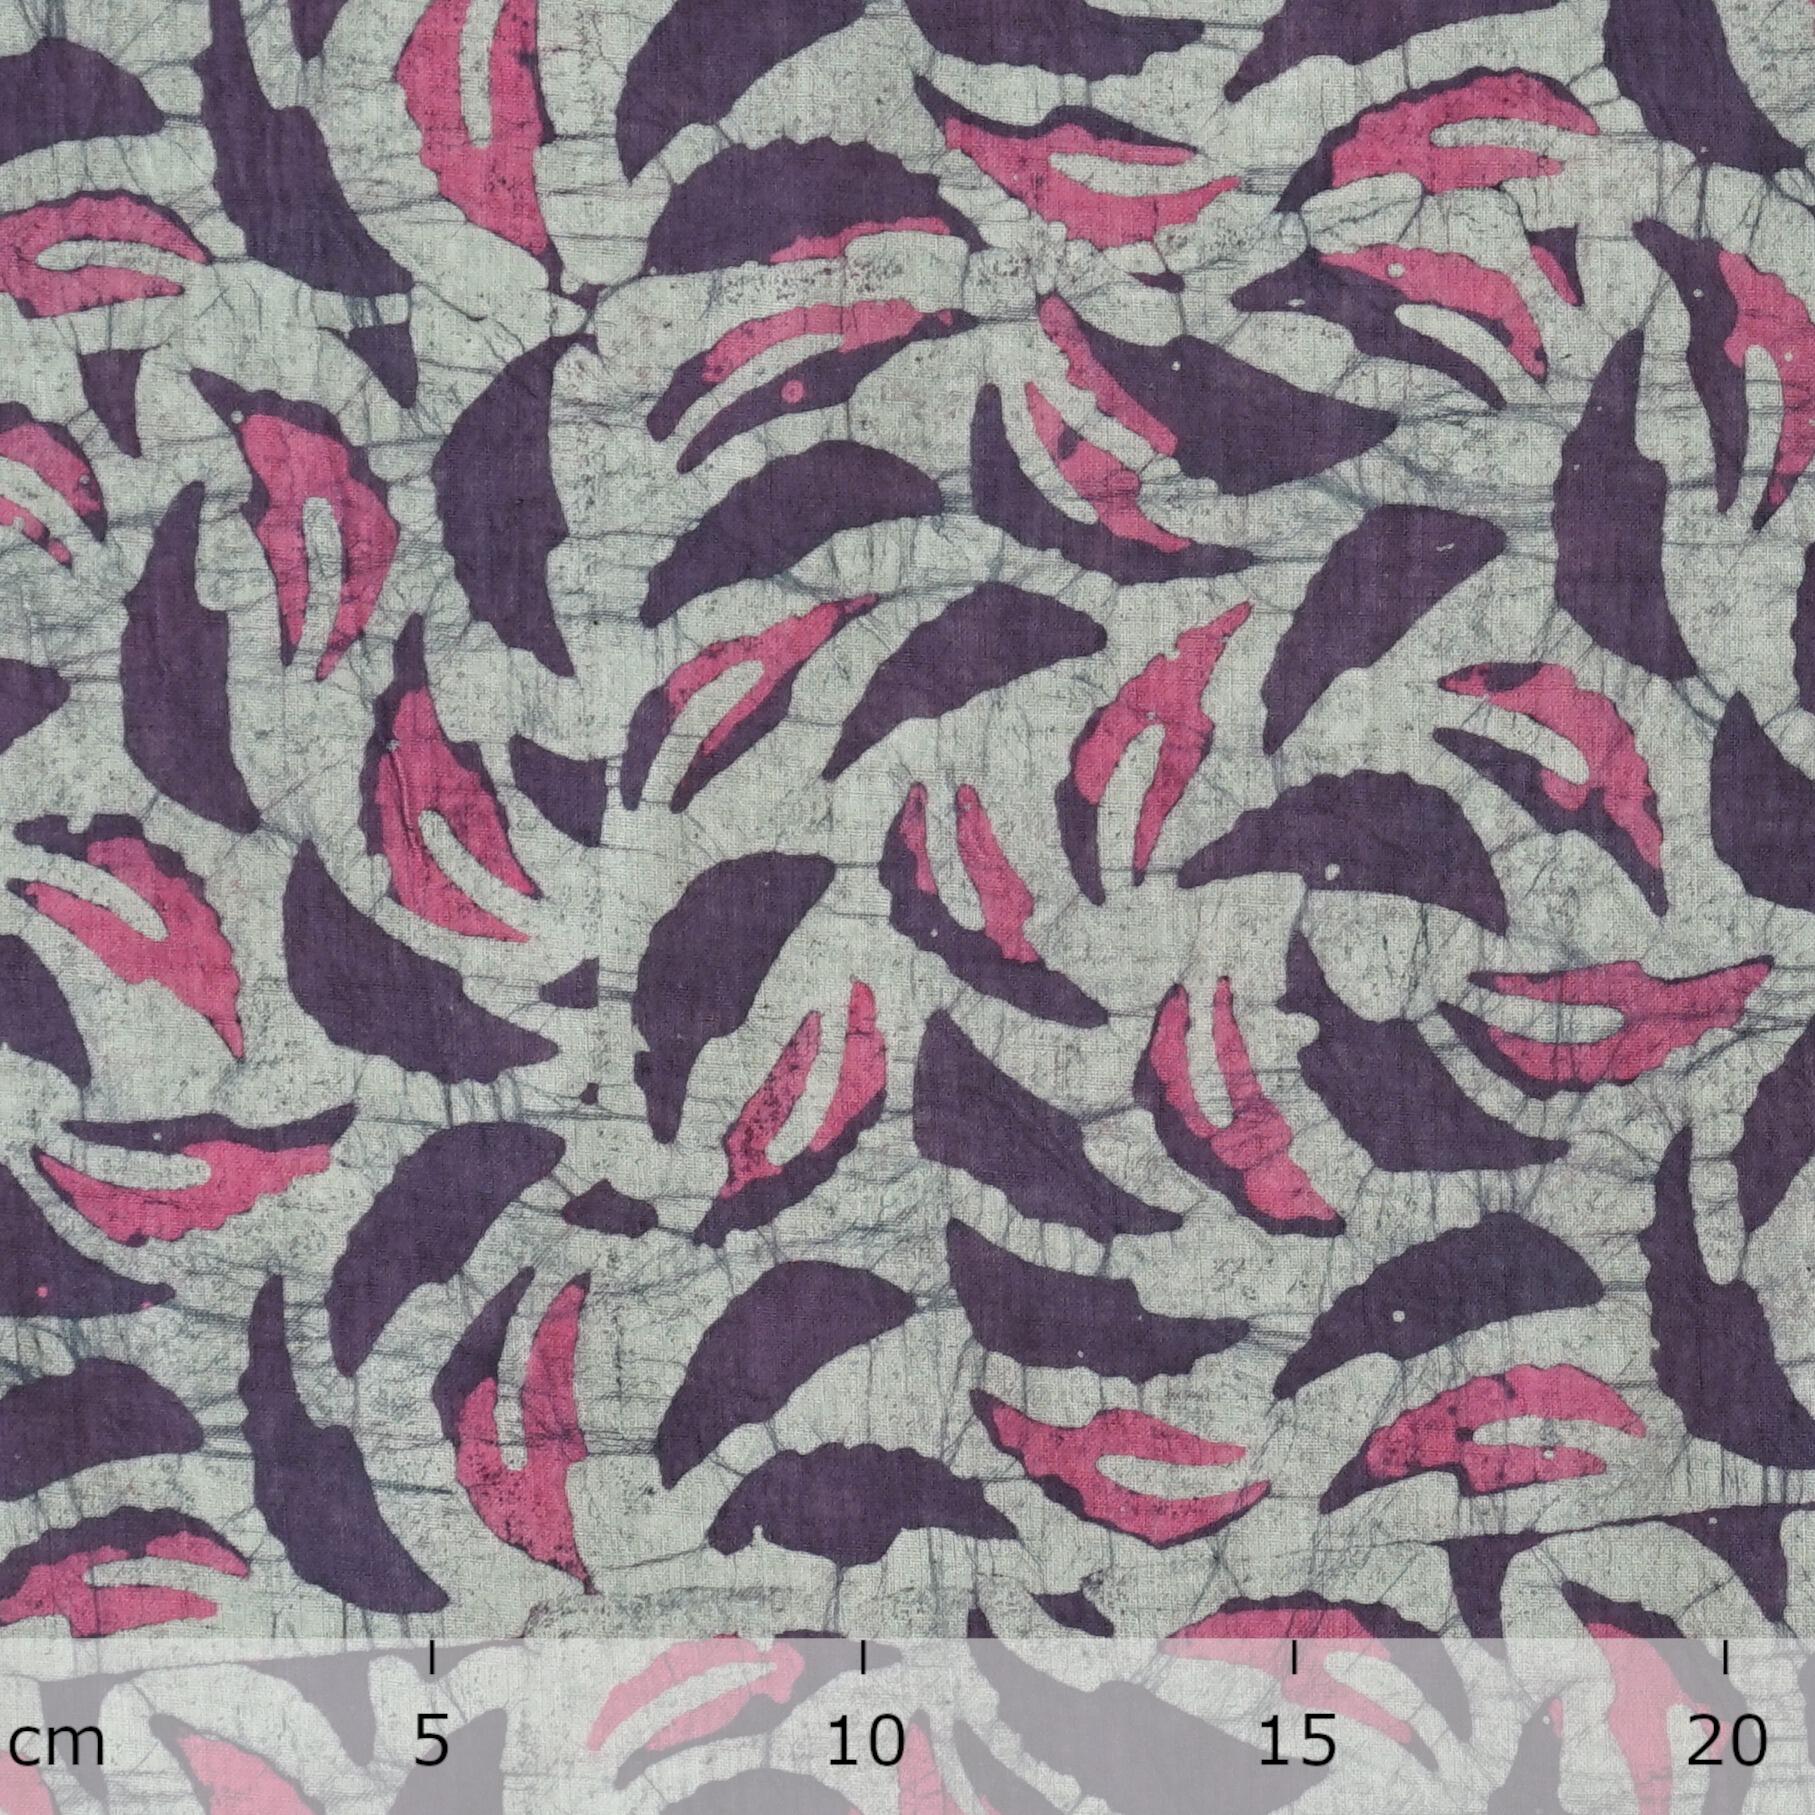 Block-Printed Batik Cotton Fabric From India - Autumnal Rustle Design - Ruler